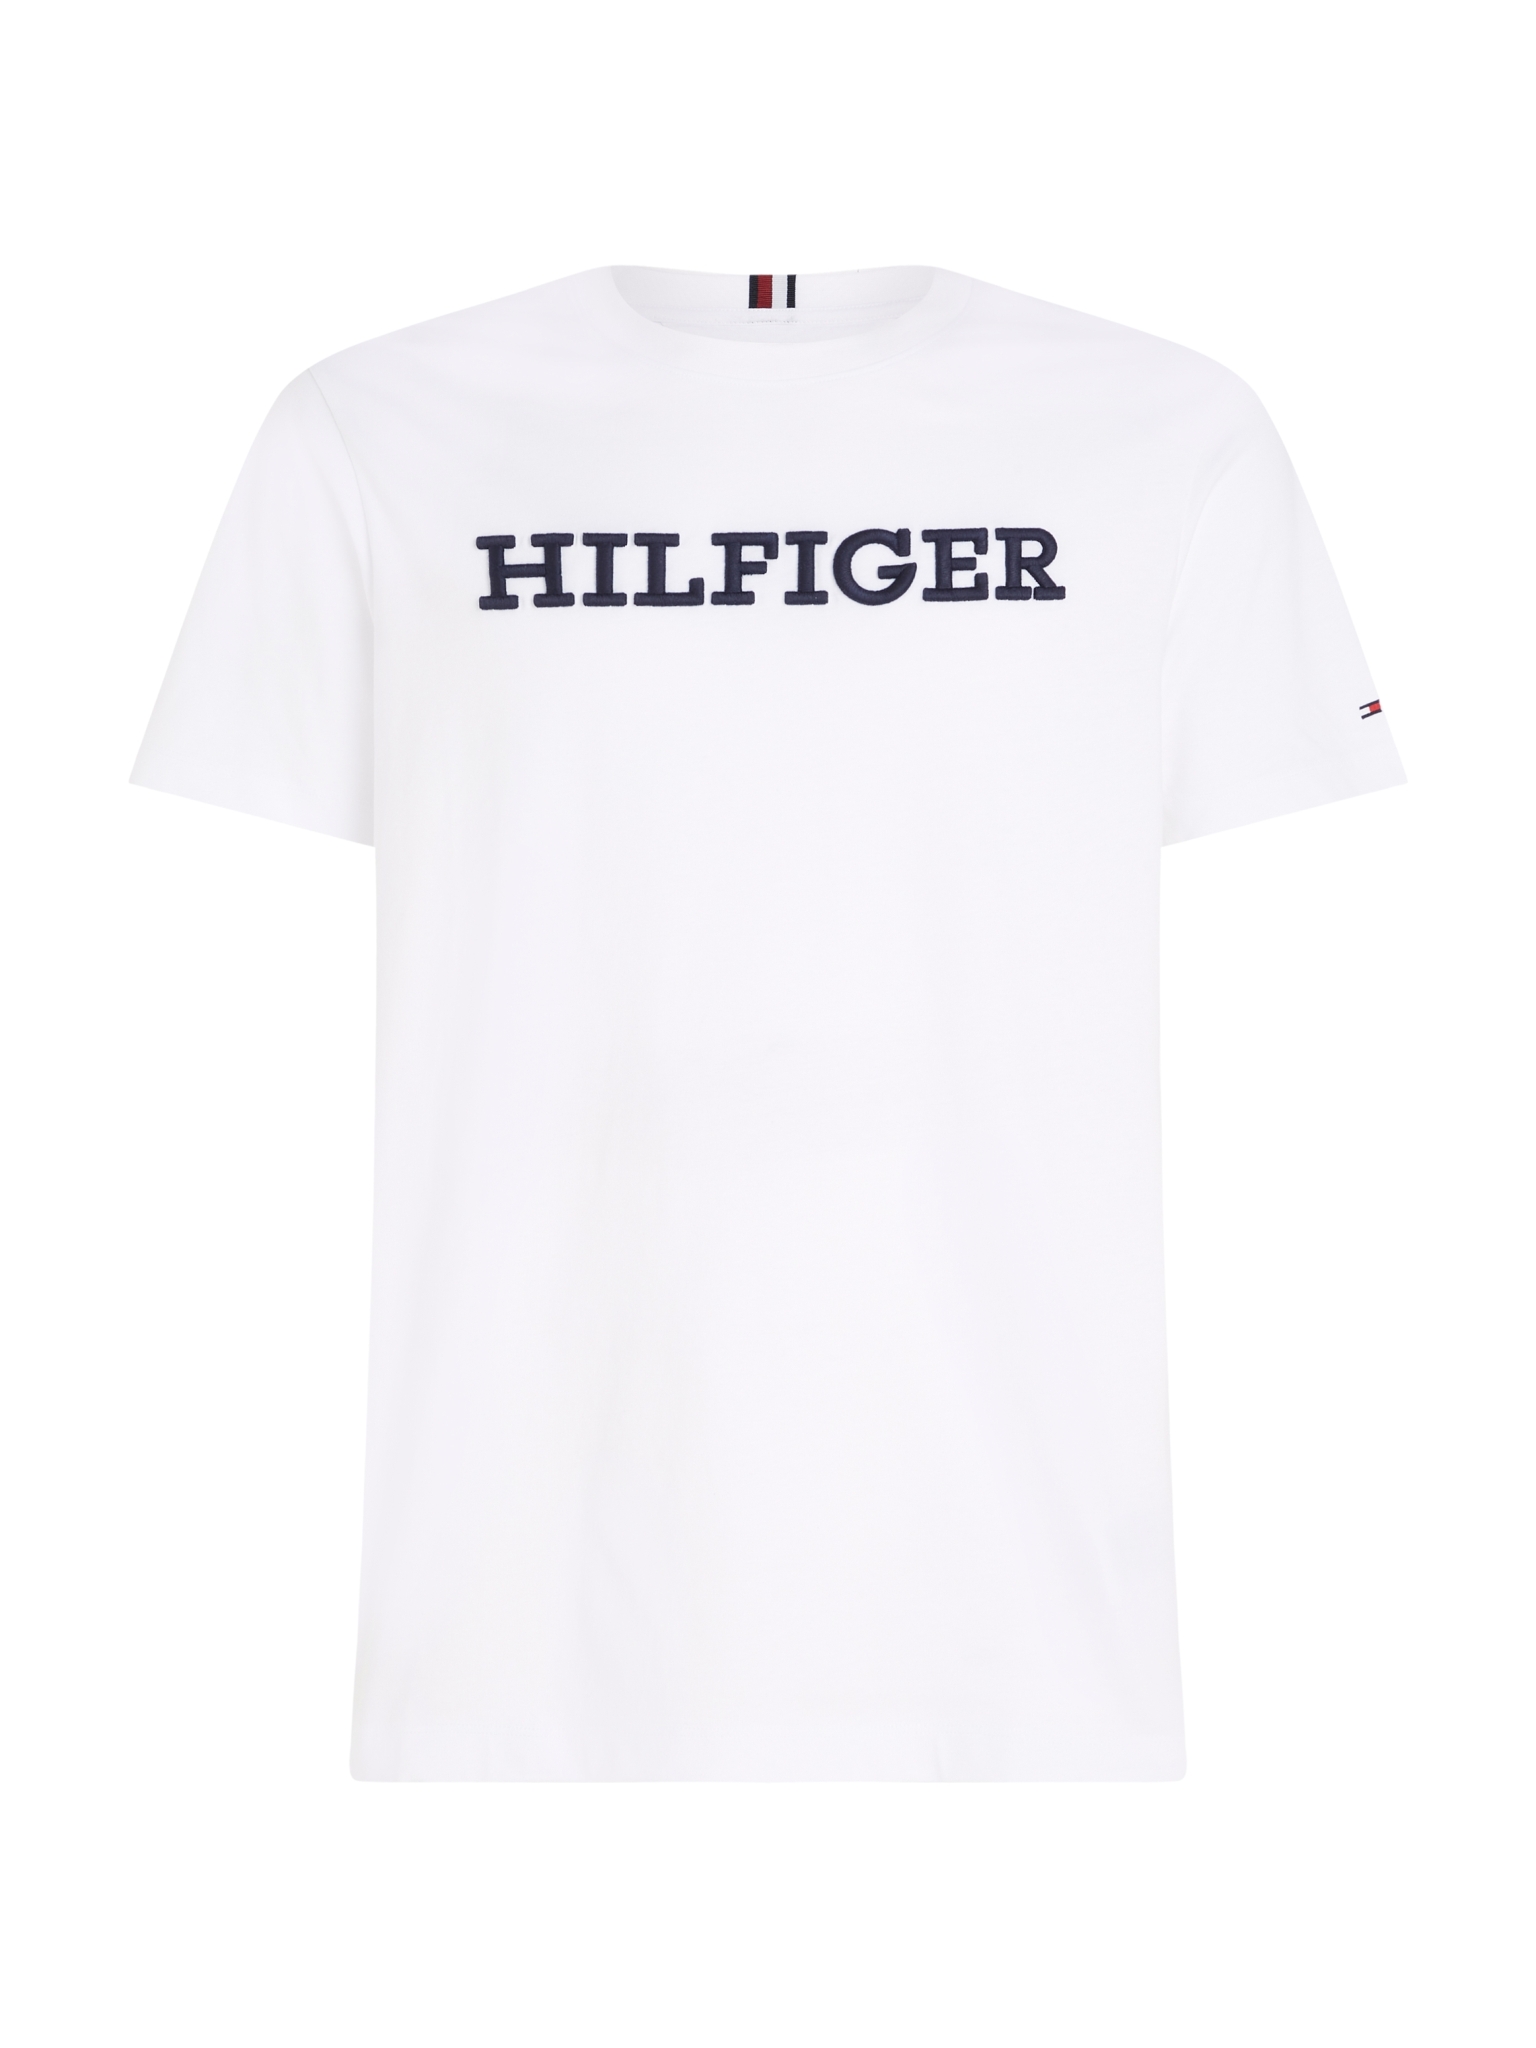 Tommy HilfigerArchive Fit T-Shirt mit Hilfiger-Monotype-Logo10704357